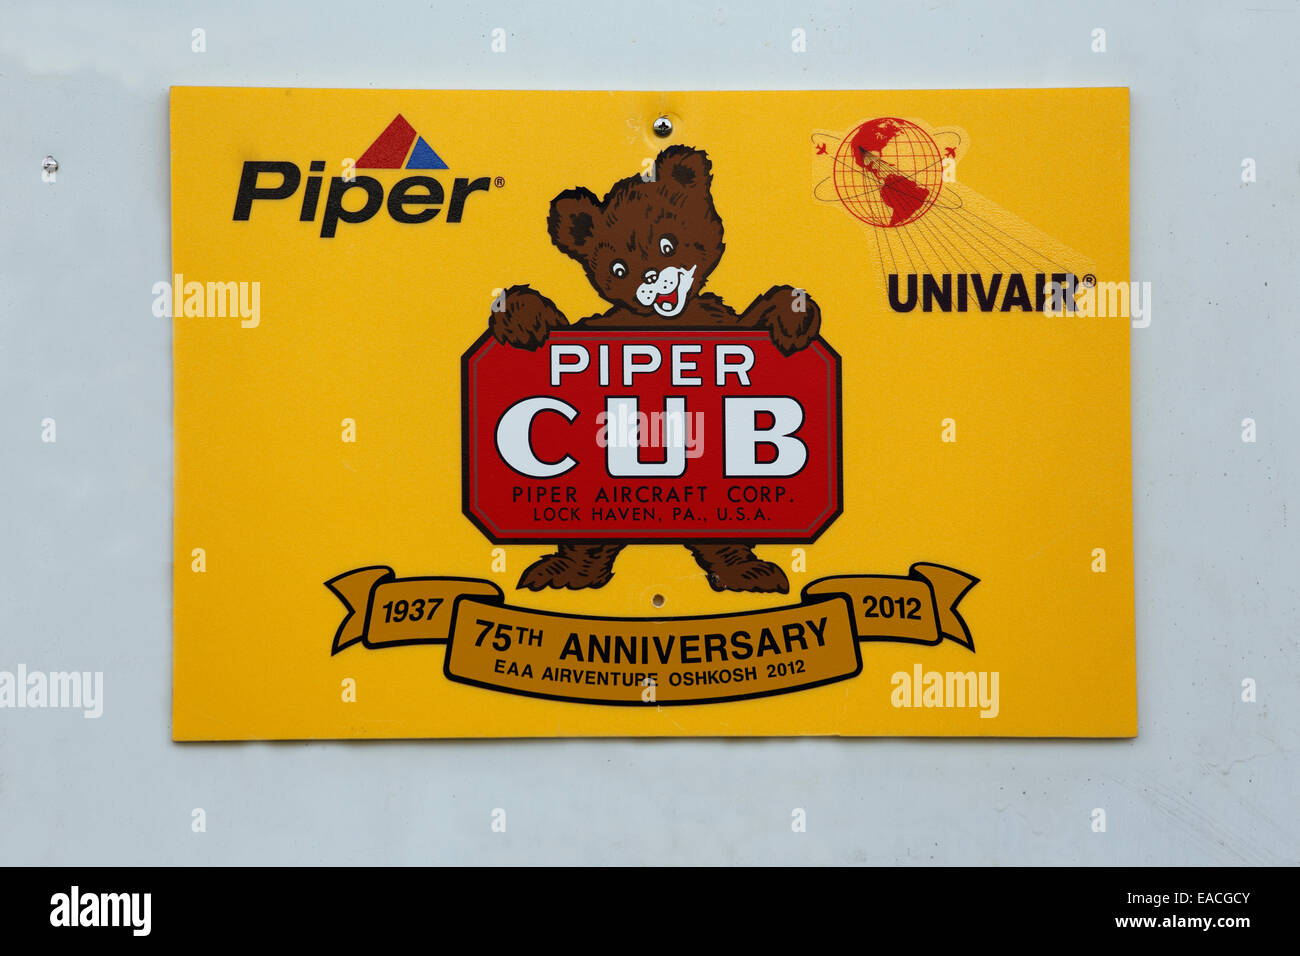 Piper Cub 75th anniversary decal Stock Photo